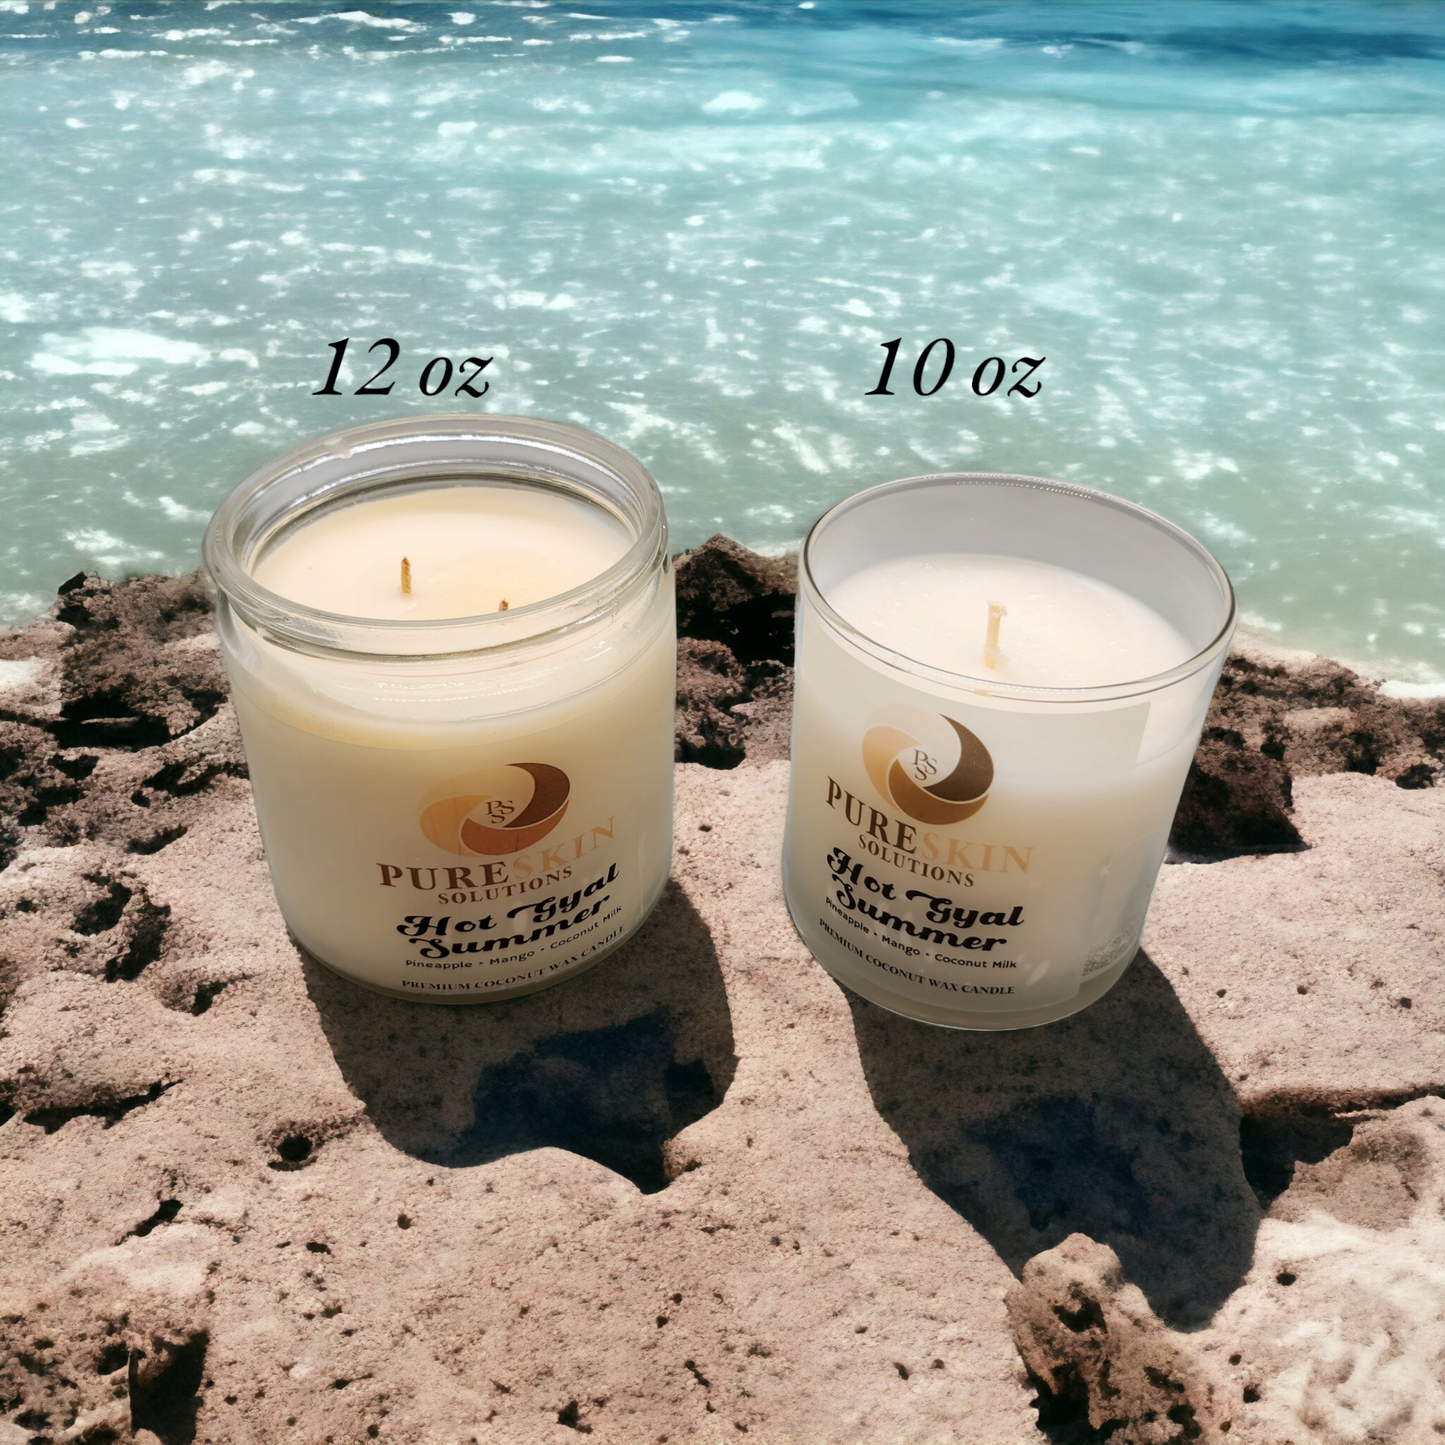 Hot Gyal Summer Premium Coconut Wax Candle